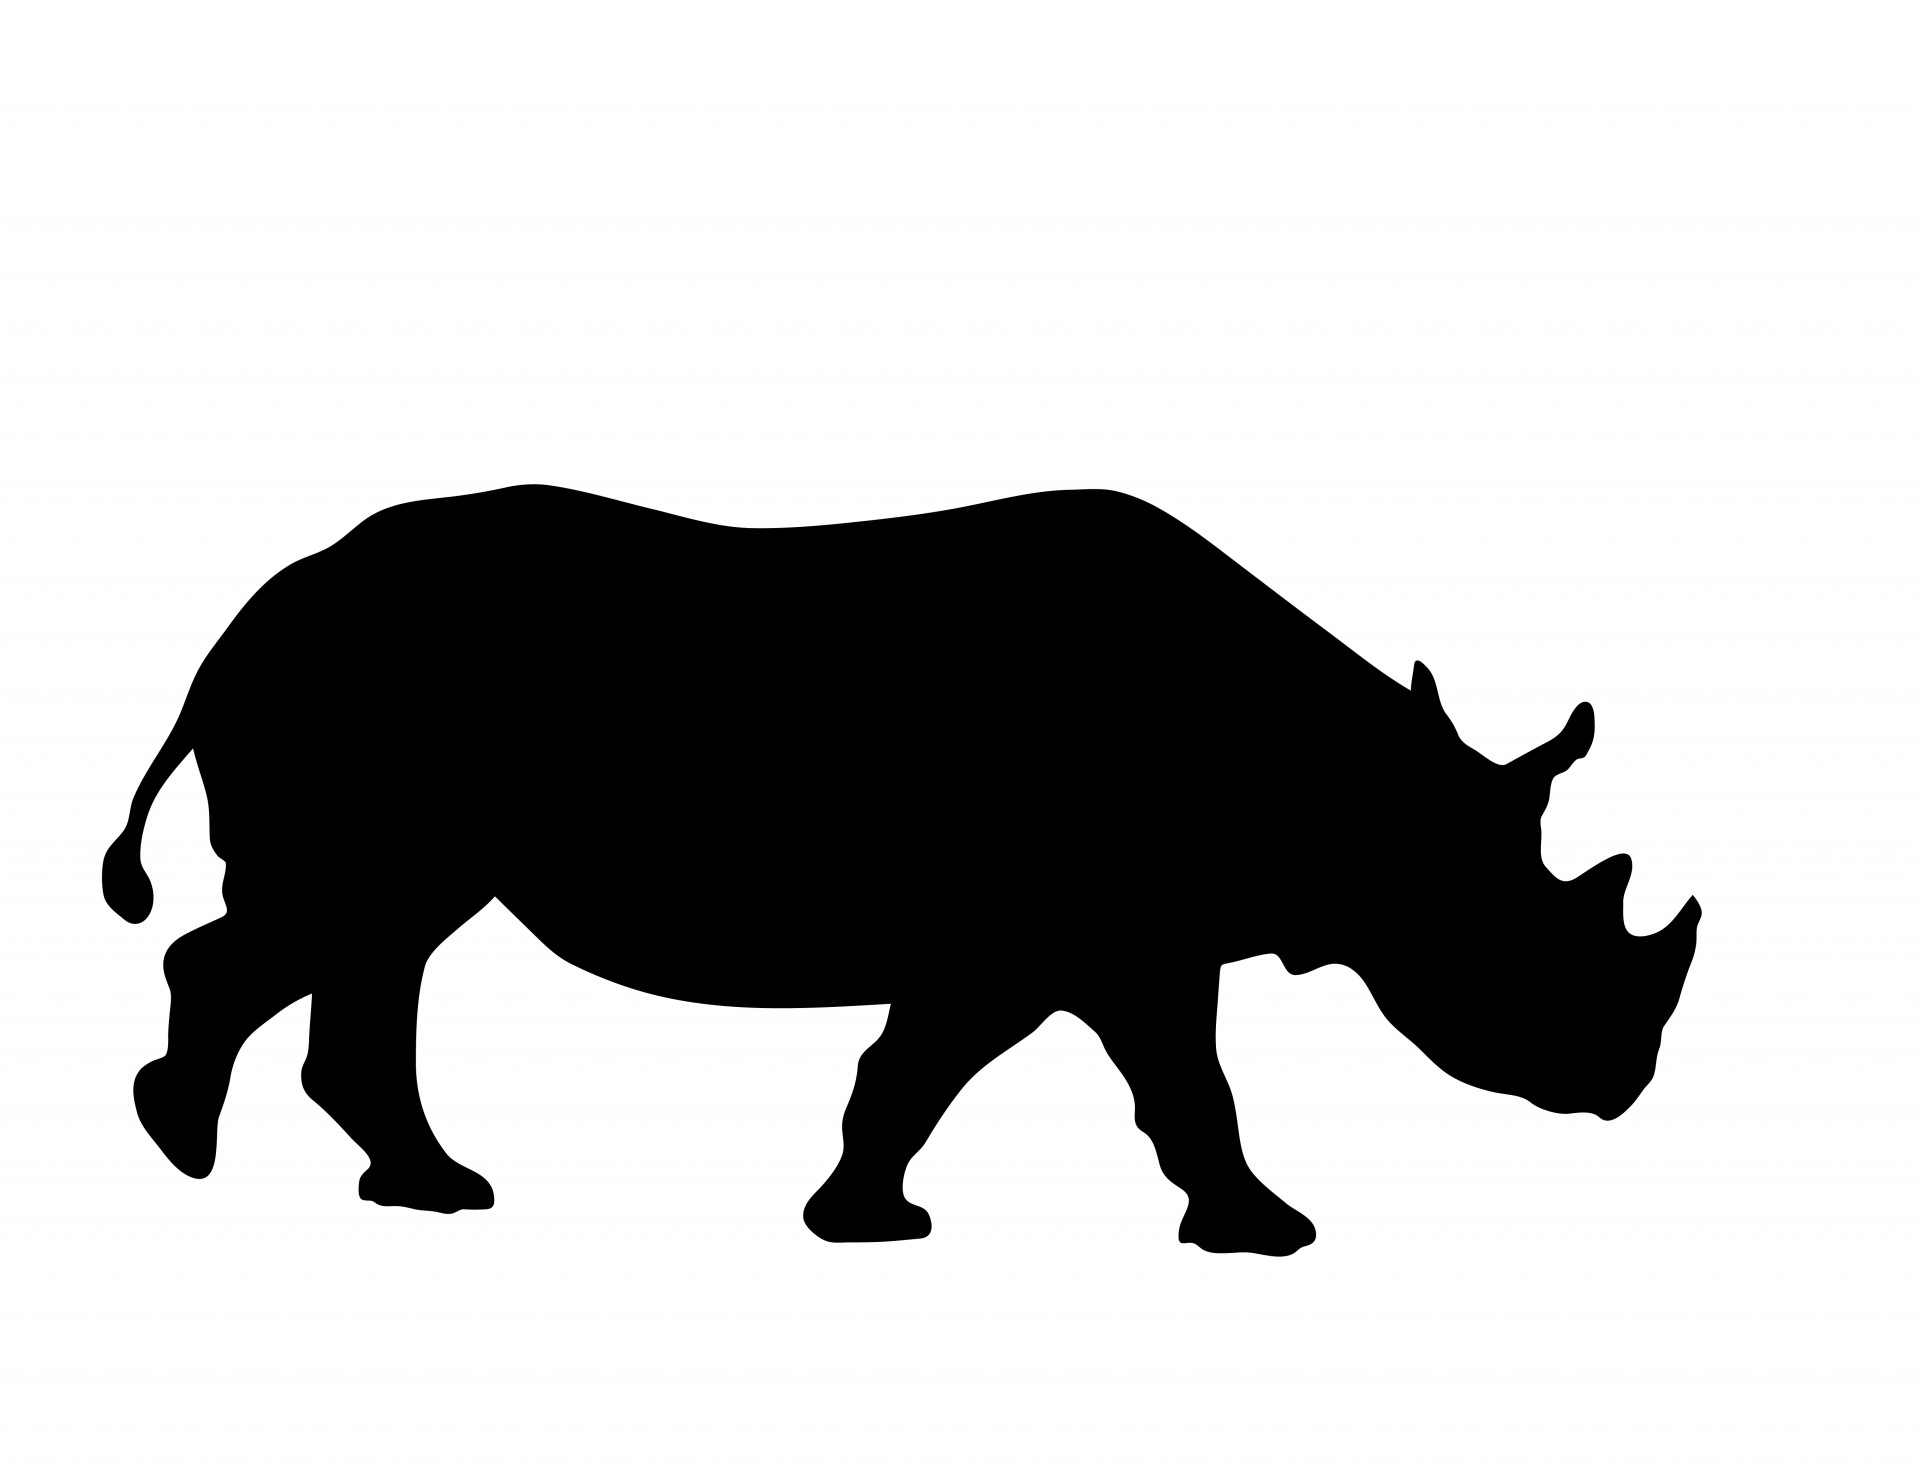 Rhino Silhouette Clipart Free Stock Photo - Public Domain Pictures